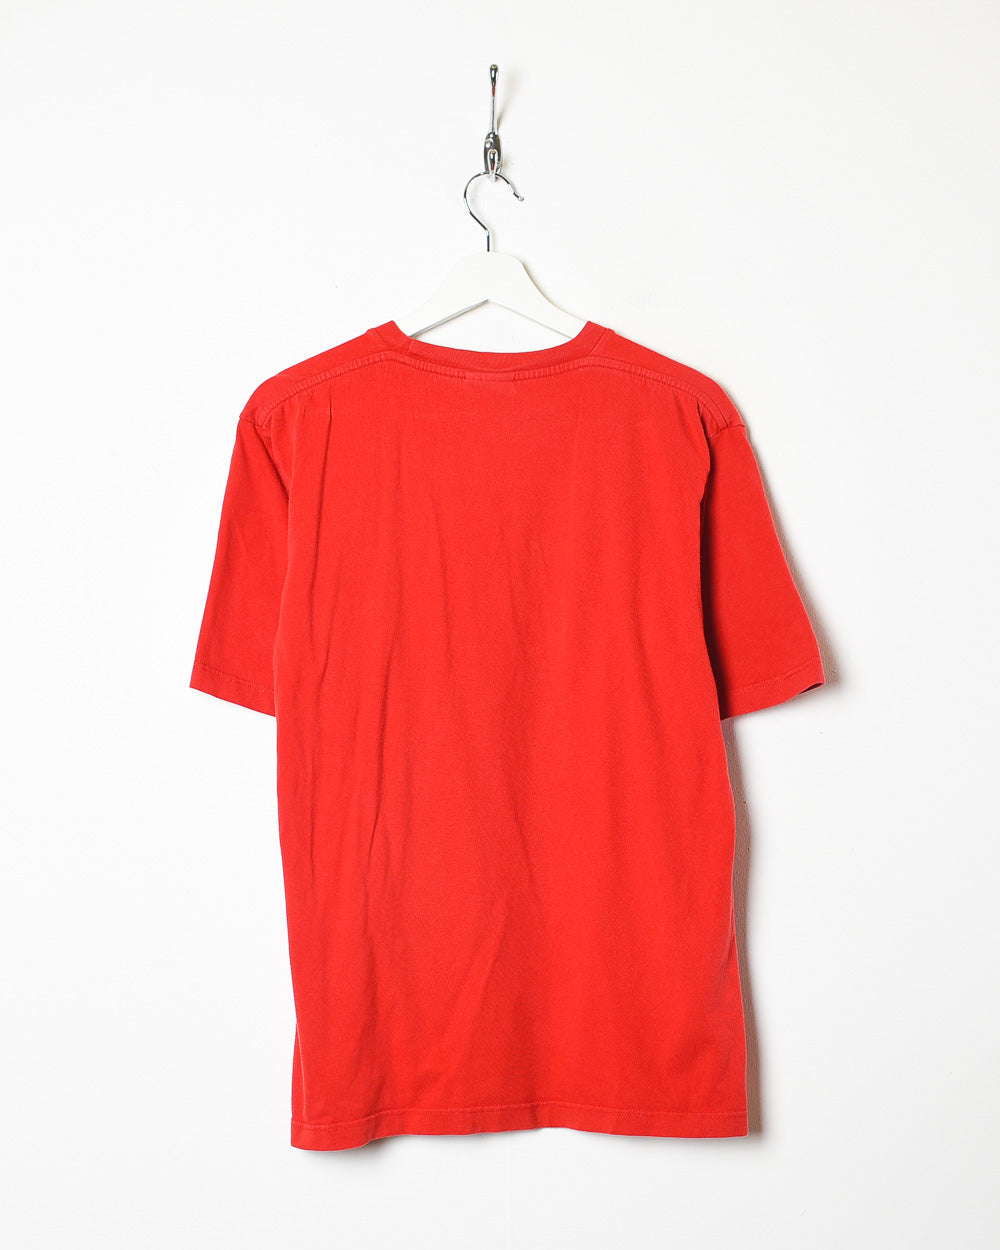 Red Nike Trademark T-Shirt - Medium